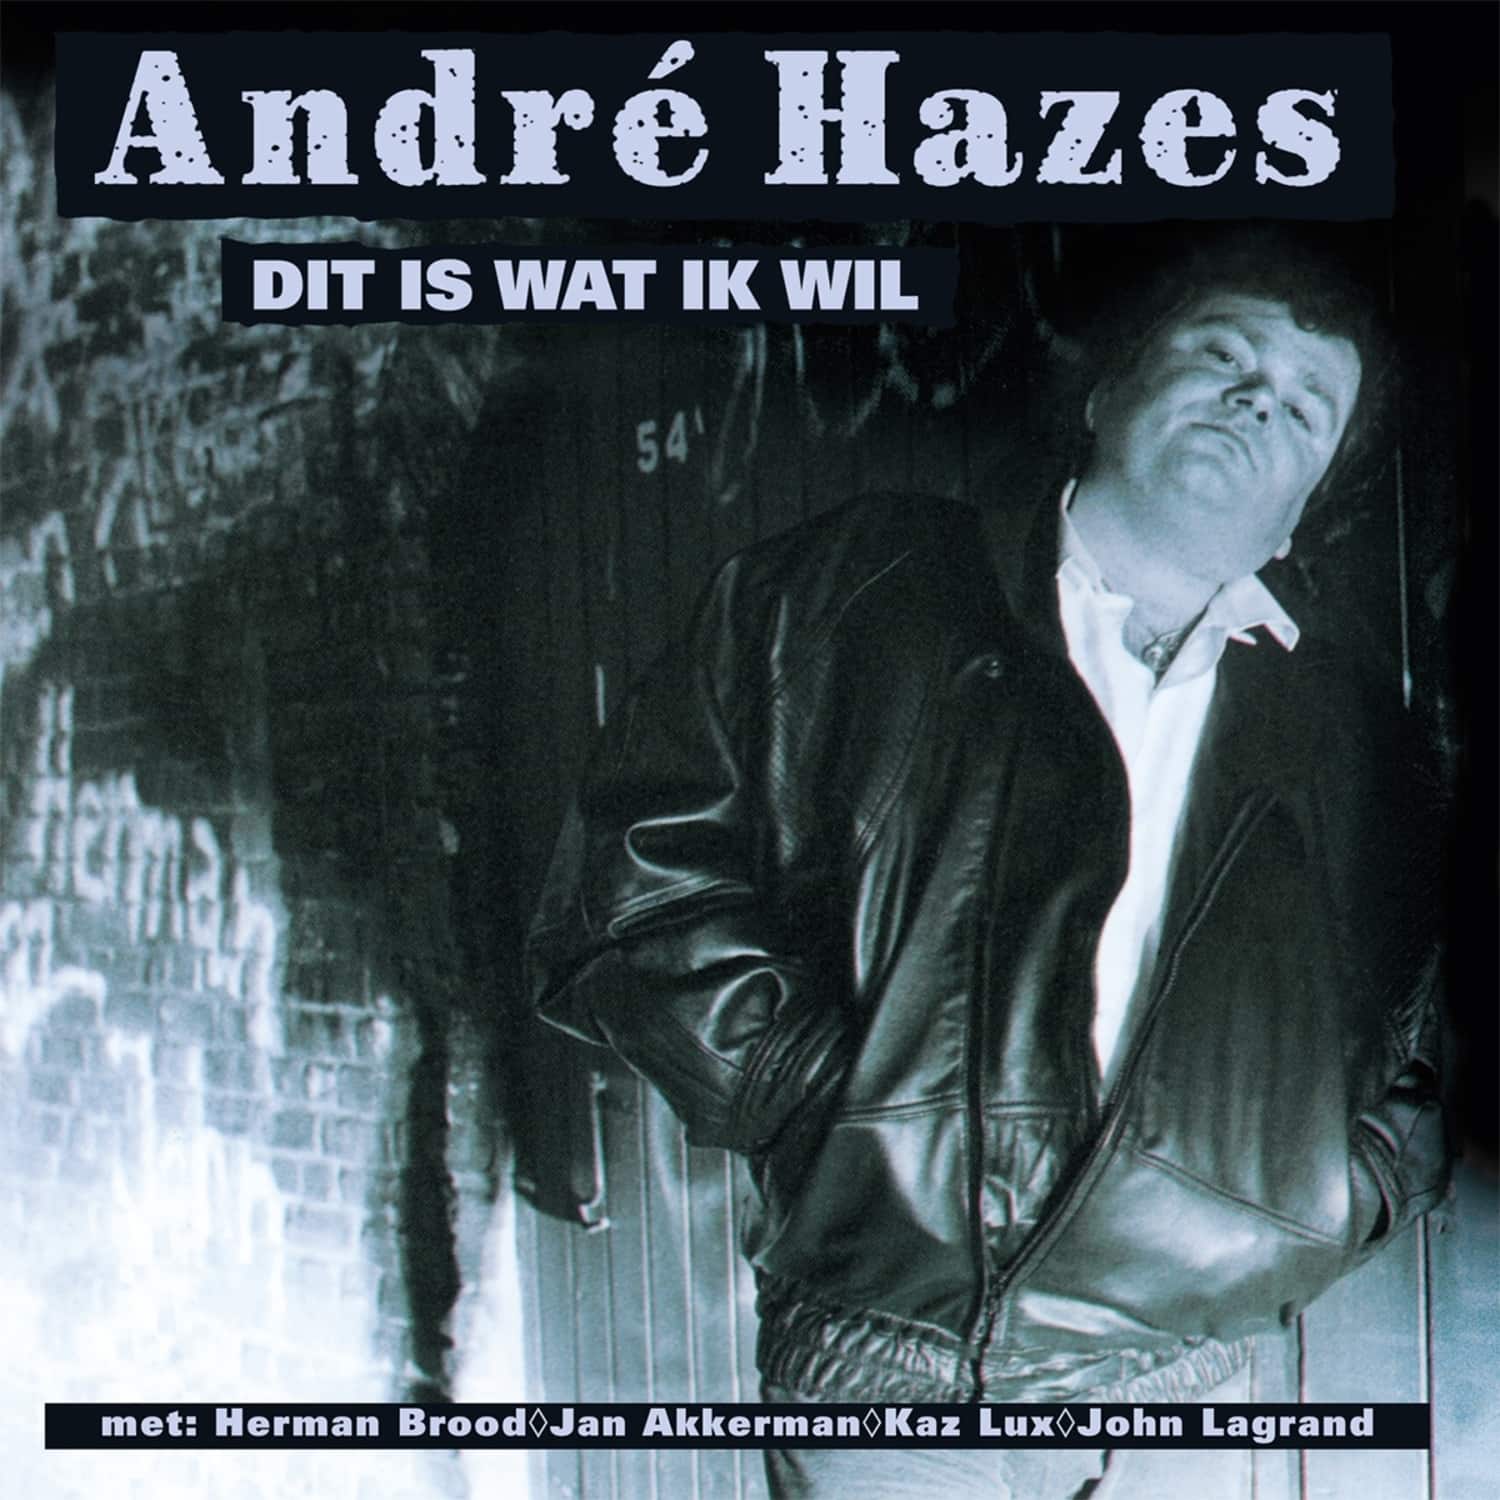  Andre Hazes - DIT IS WAT IK WIL 